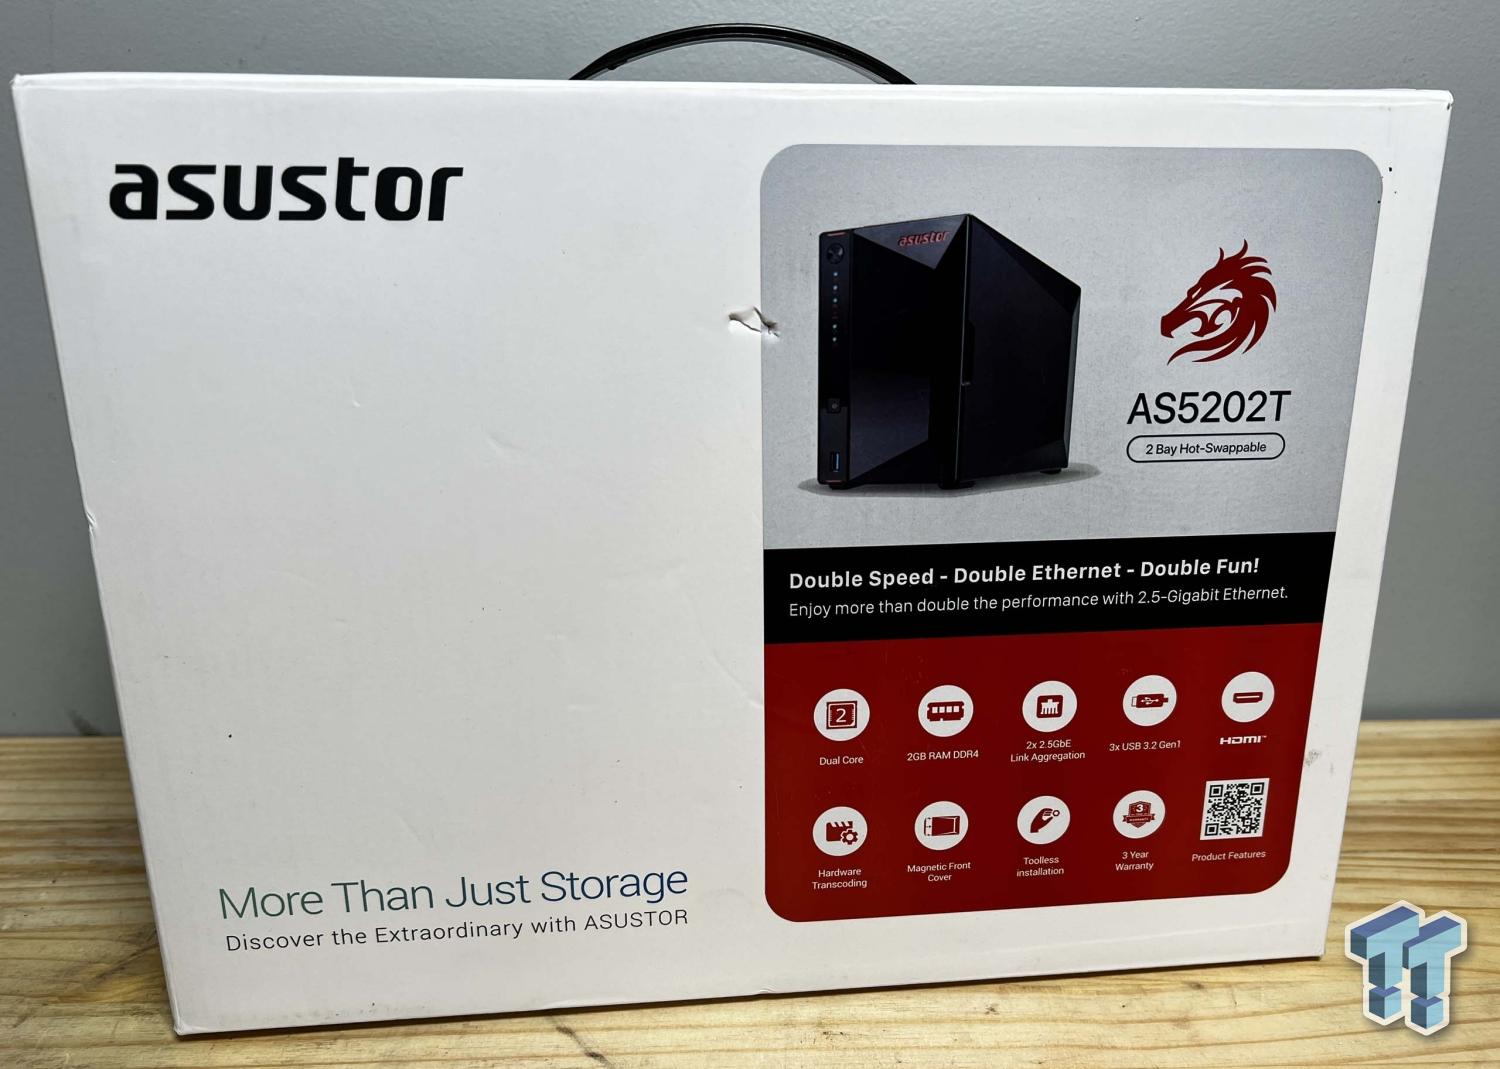 ASUSTOR Nimbustor 2 (AS5202T) Two-Bay NAS Review